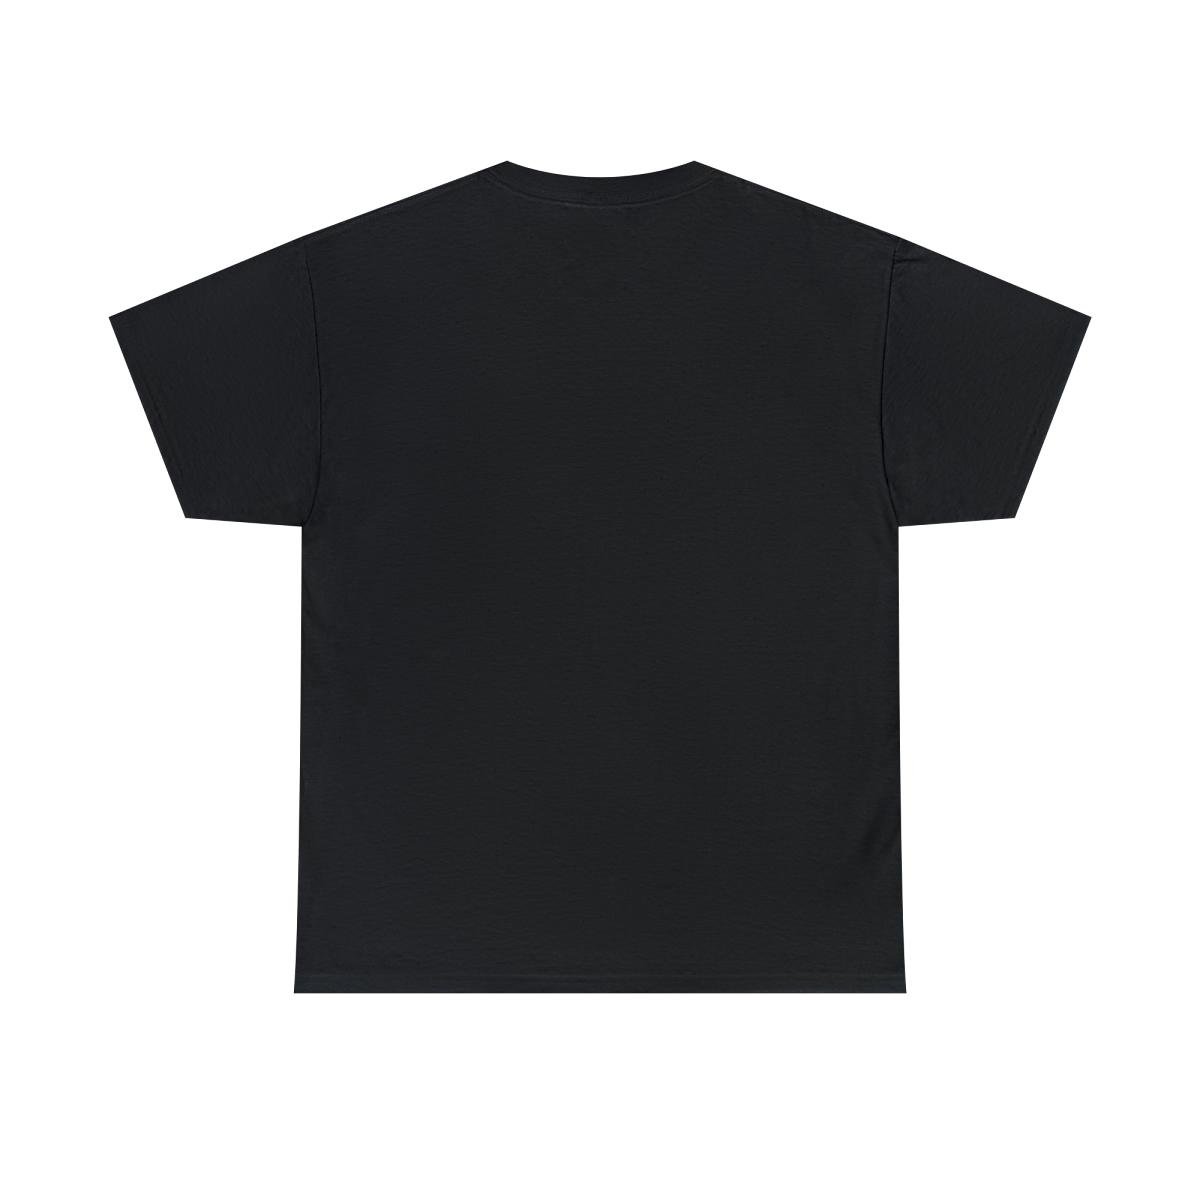 Motivik – The Head Collector Short Sleeve Tshirt